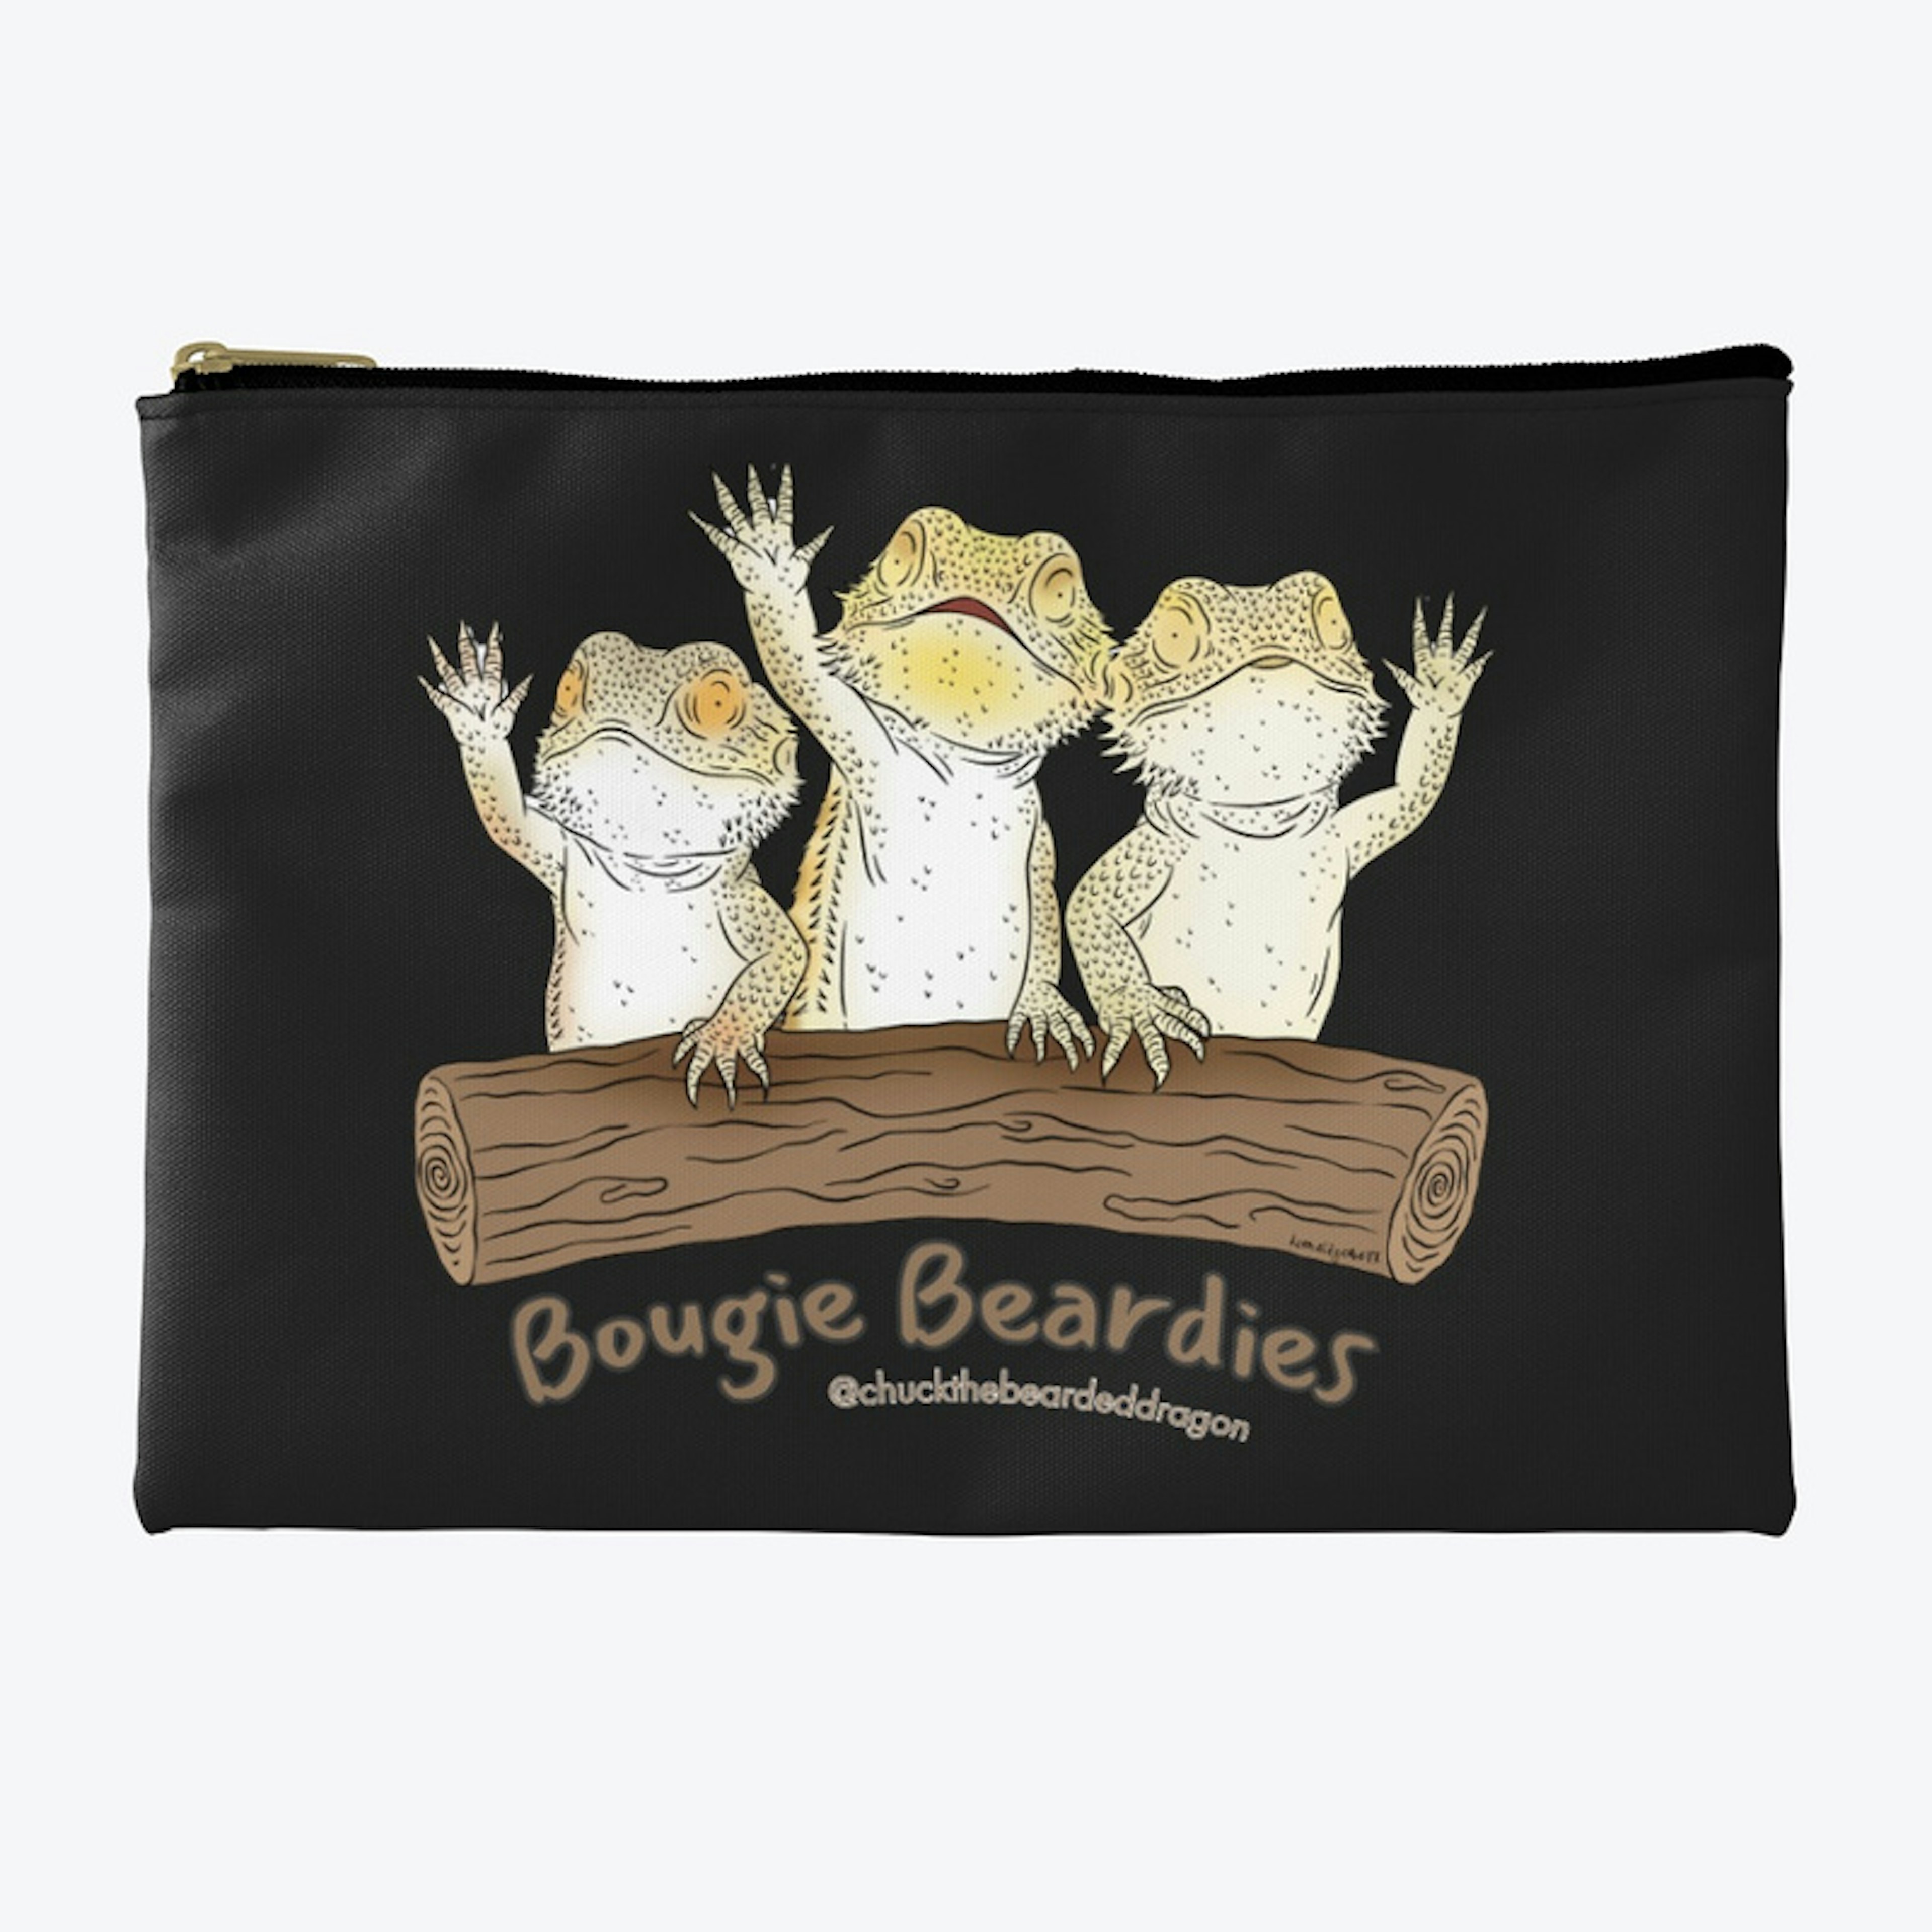 Bougie Beardies logo